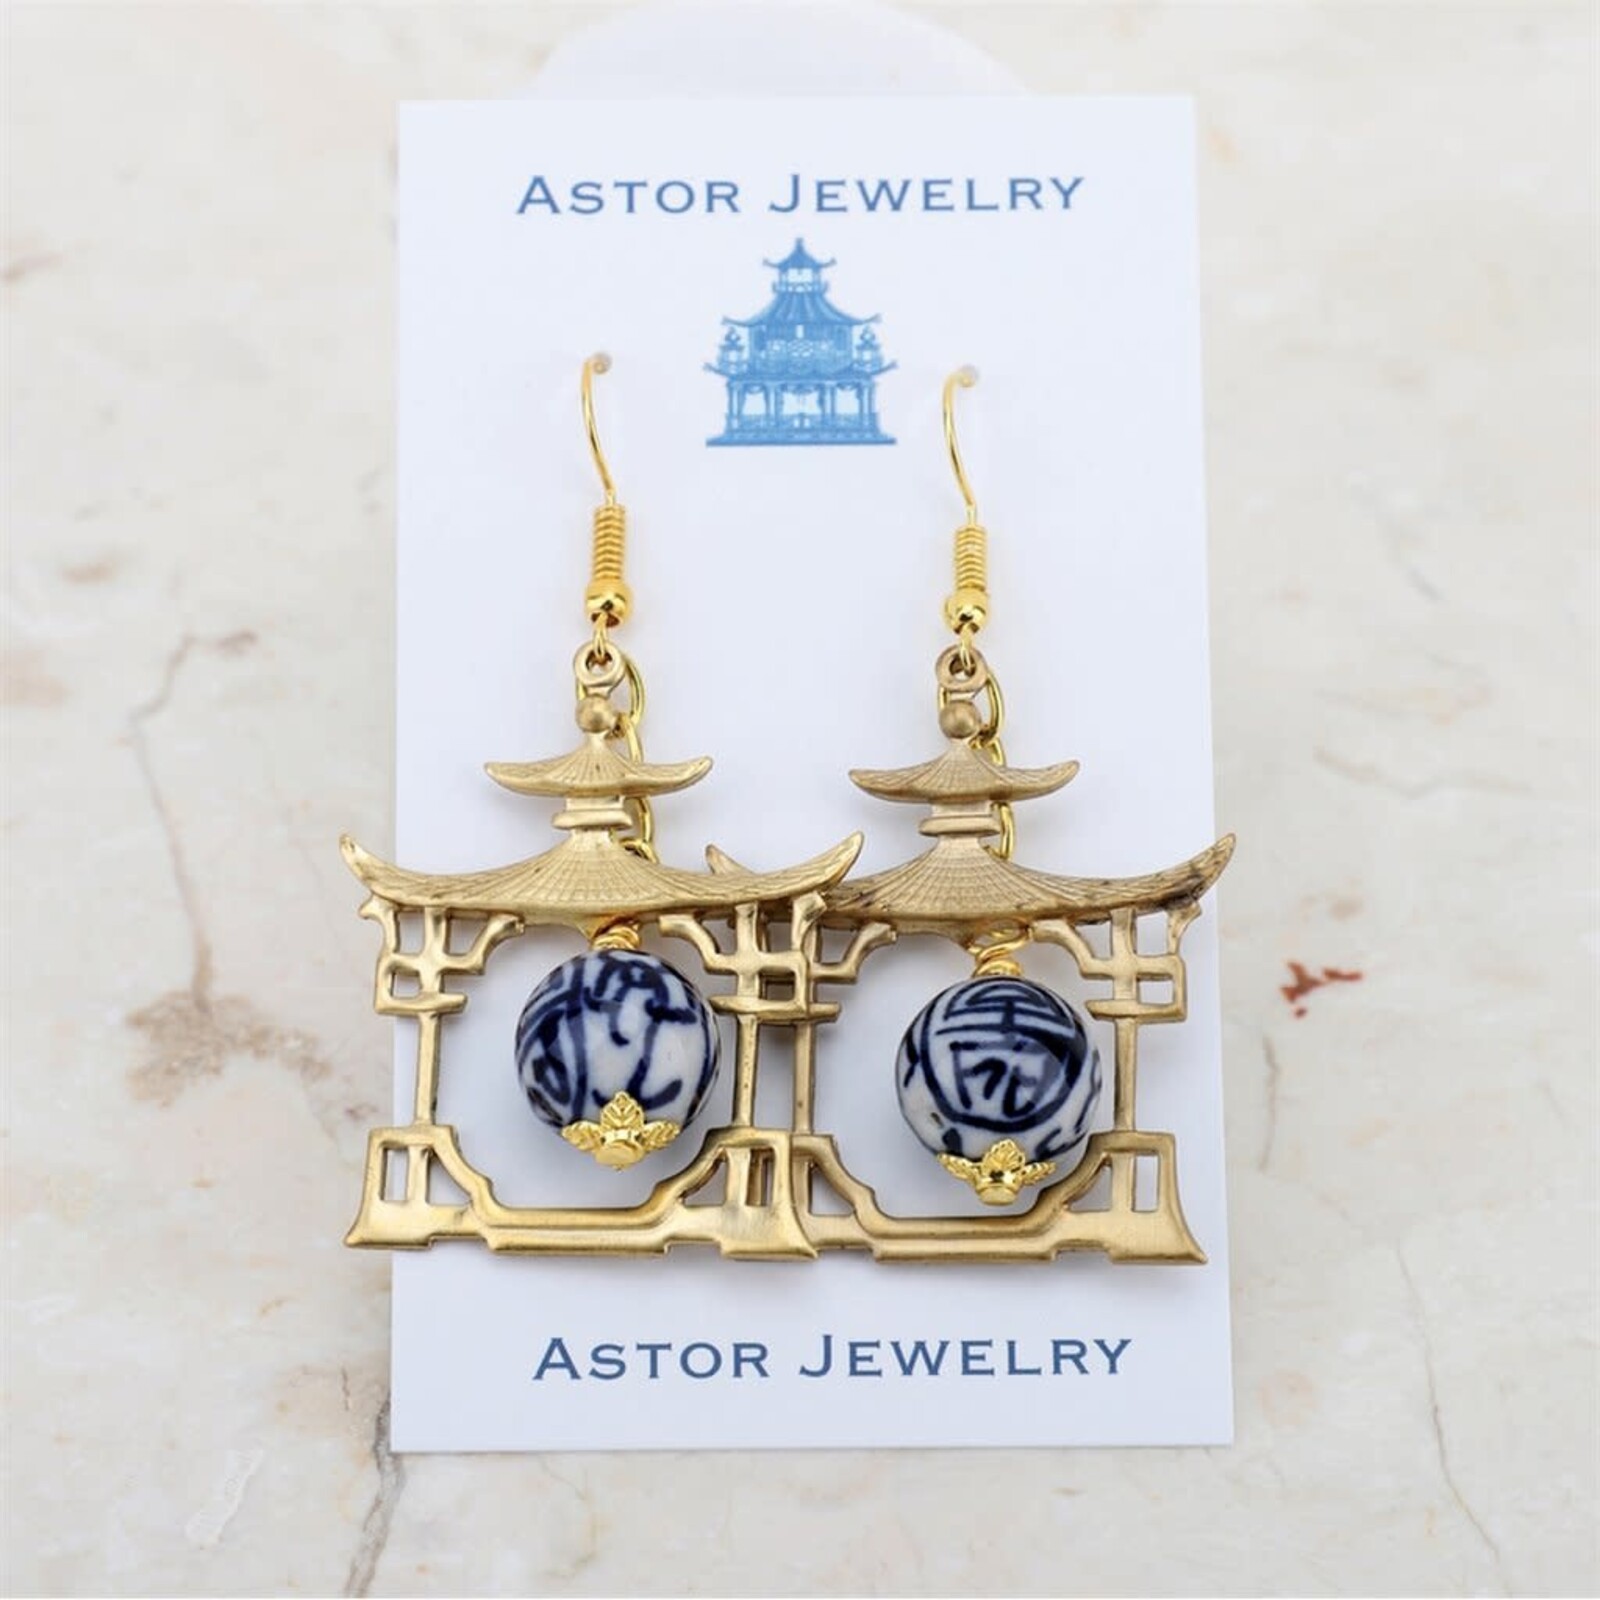 Astor Jewelry Brass Pagoda Earrings  Blue & White Bead  Made in U.S.A   24075 loading=